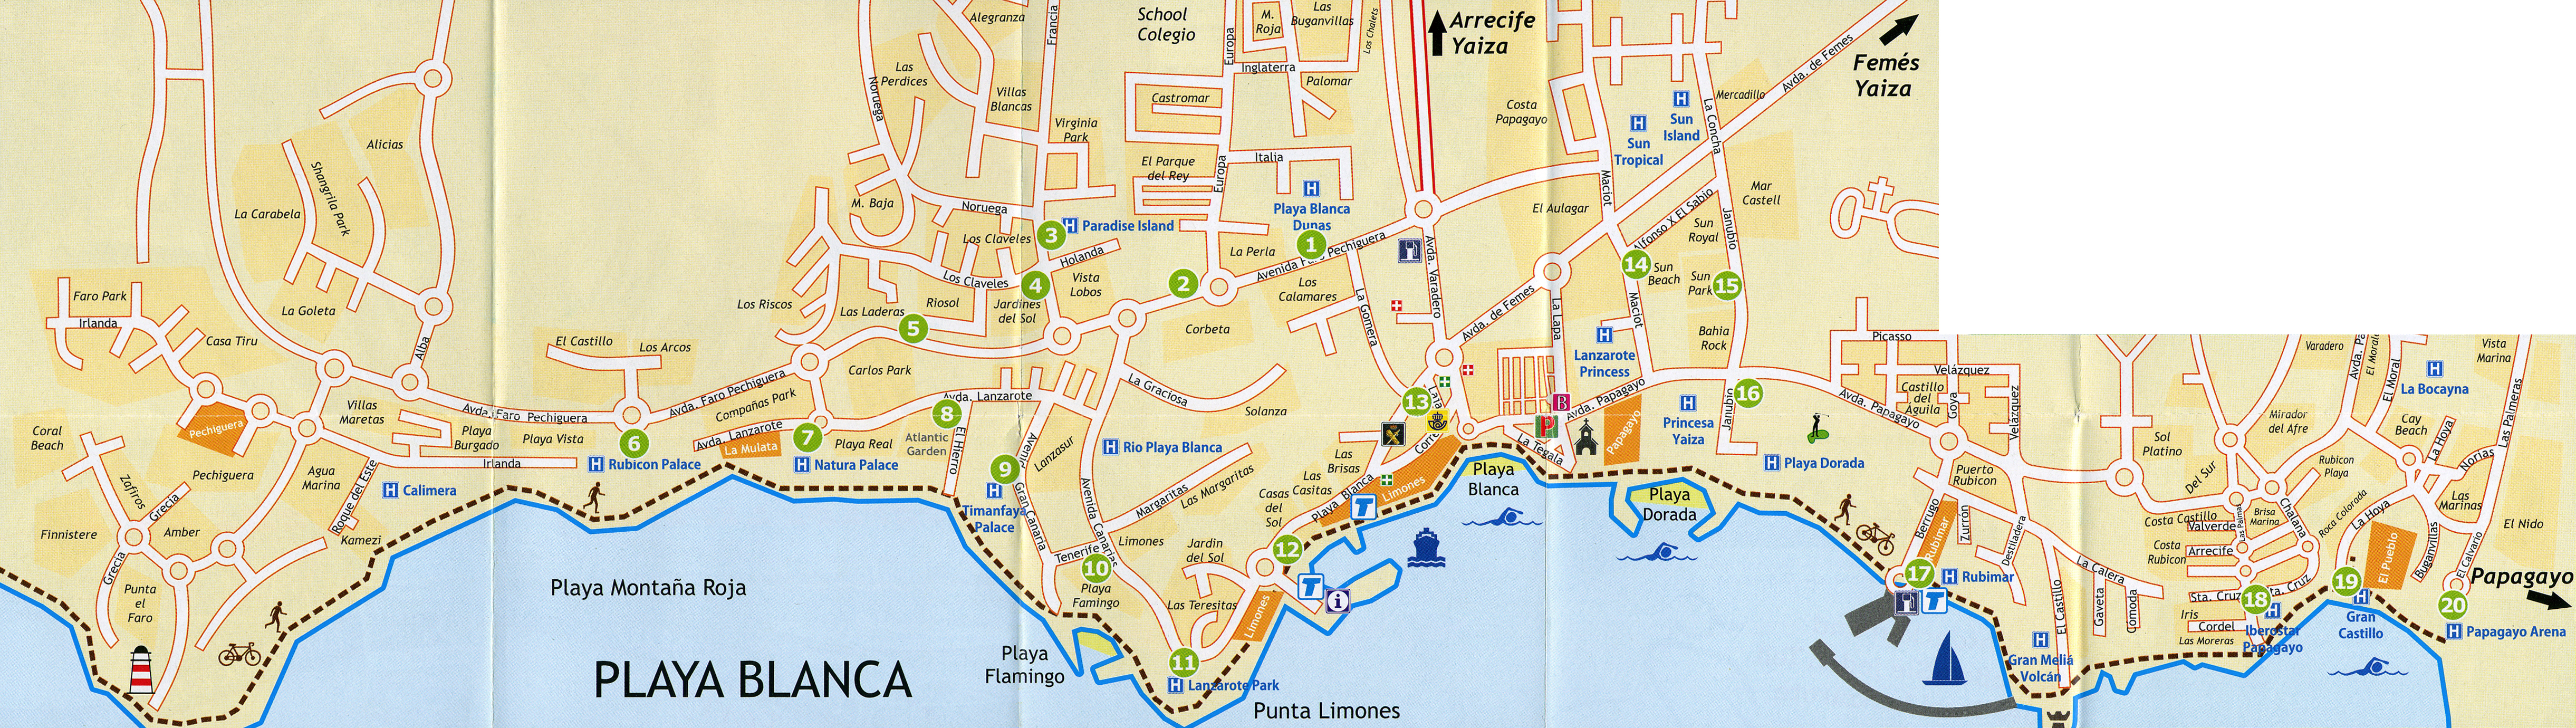 playa blanca lanzarote map The Village Of Playa Blanca In Lanzarote playa blanca lanzarote map